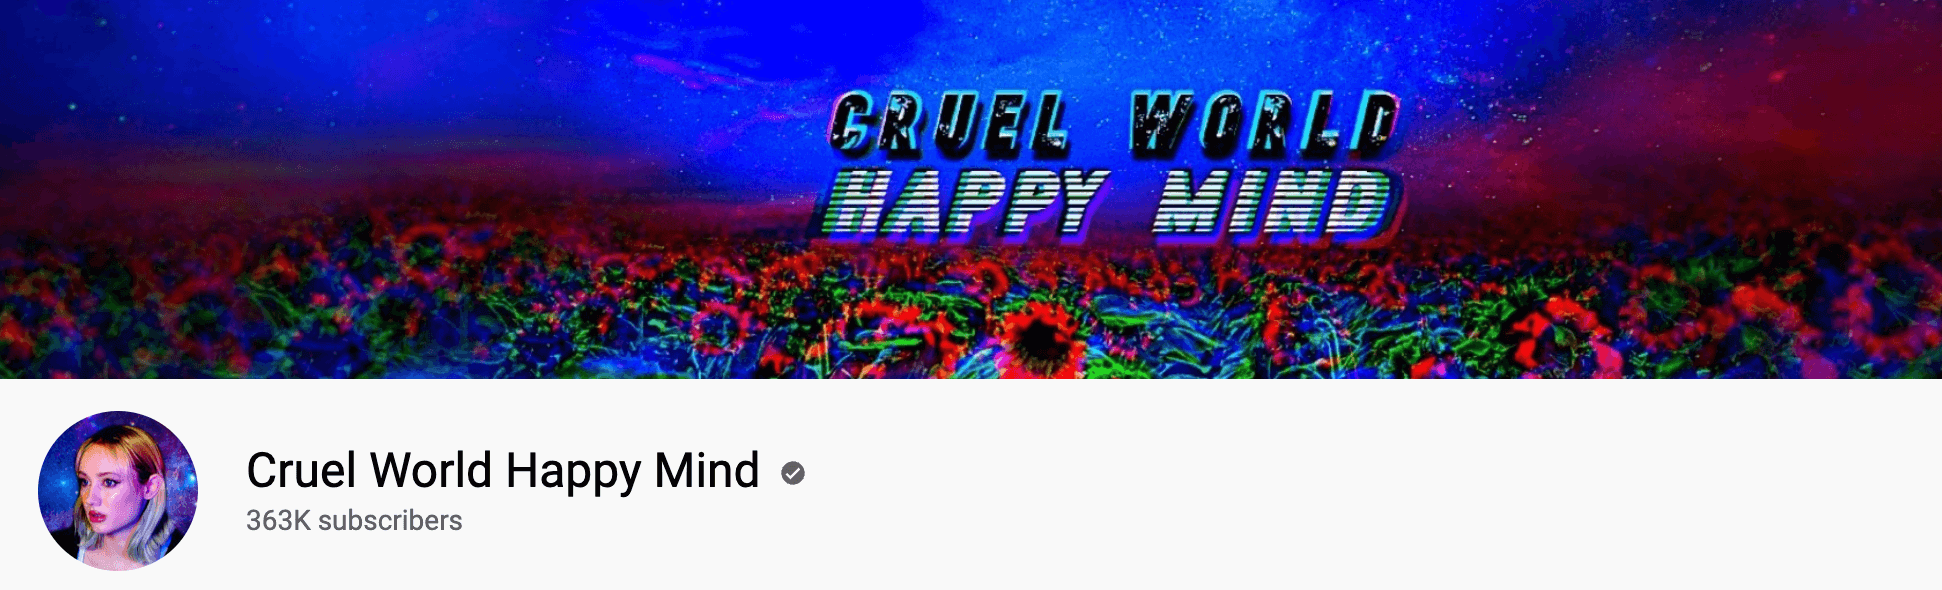 Cruel World Happy Mind YouTube channel